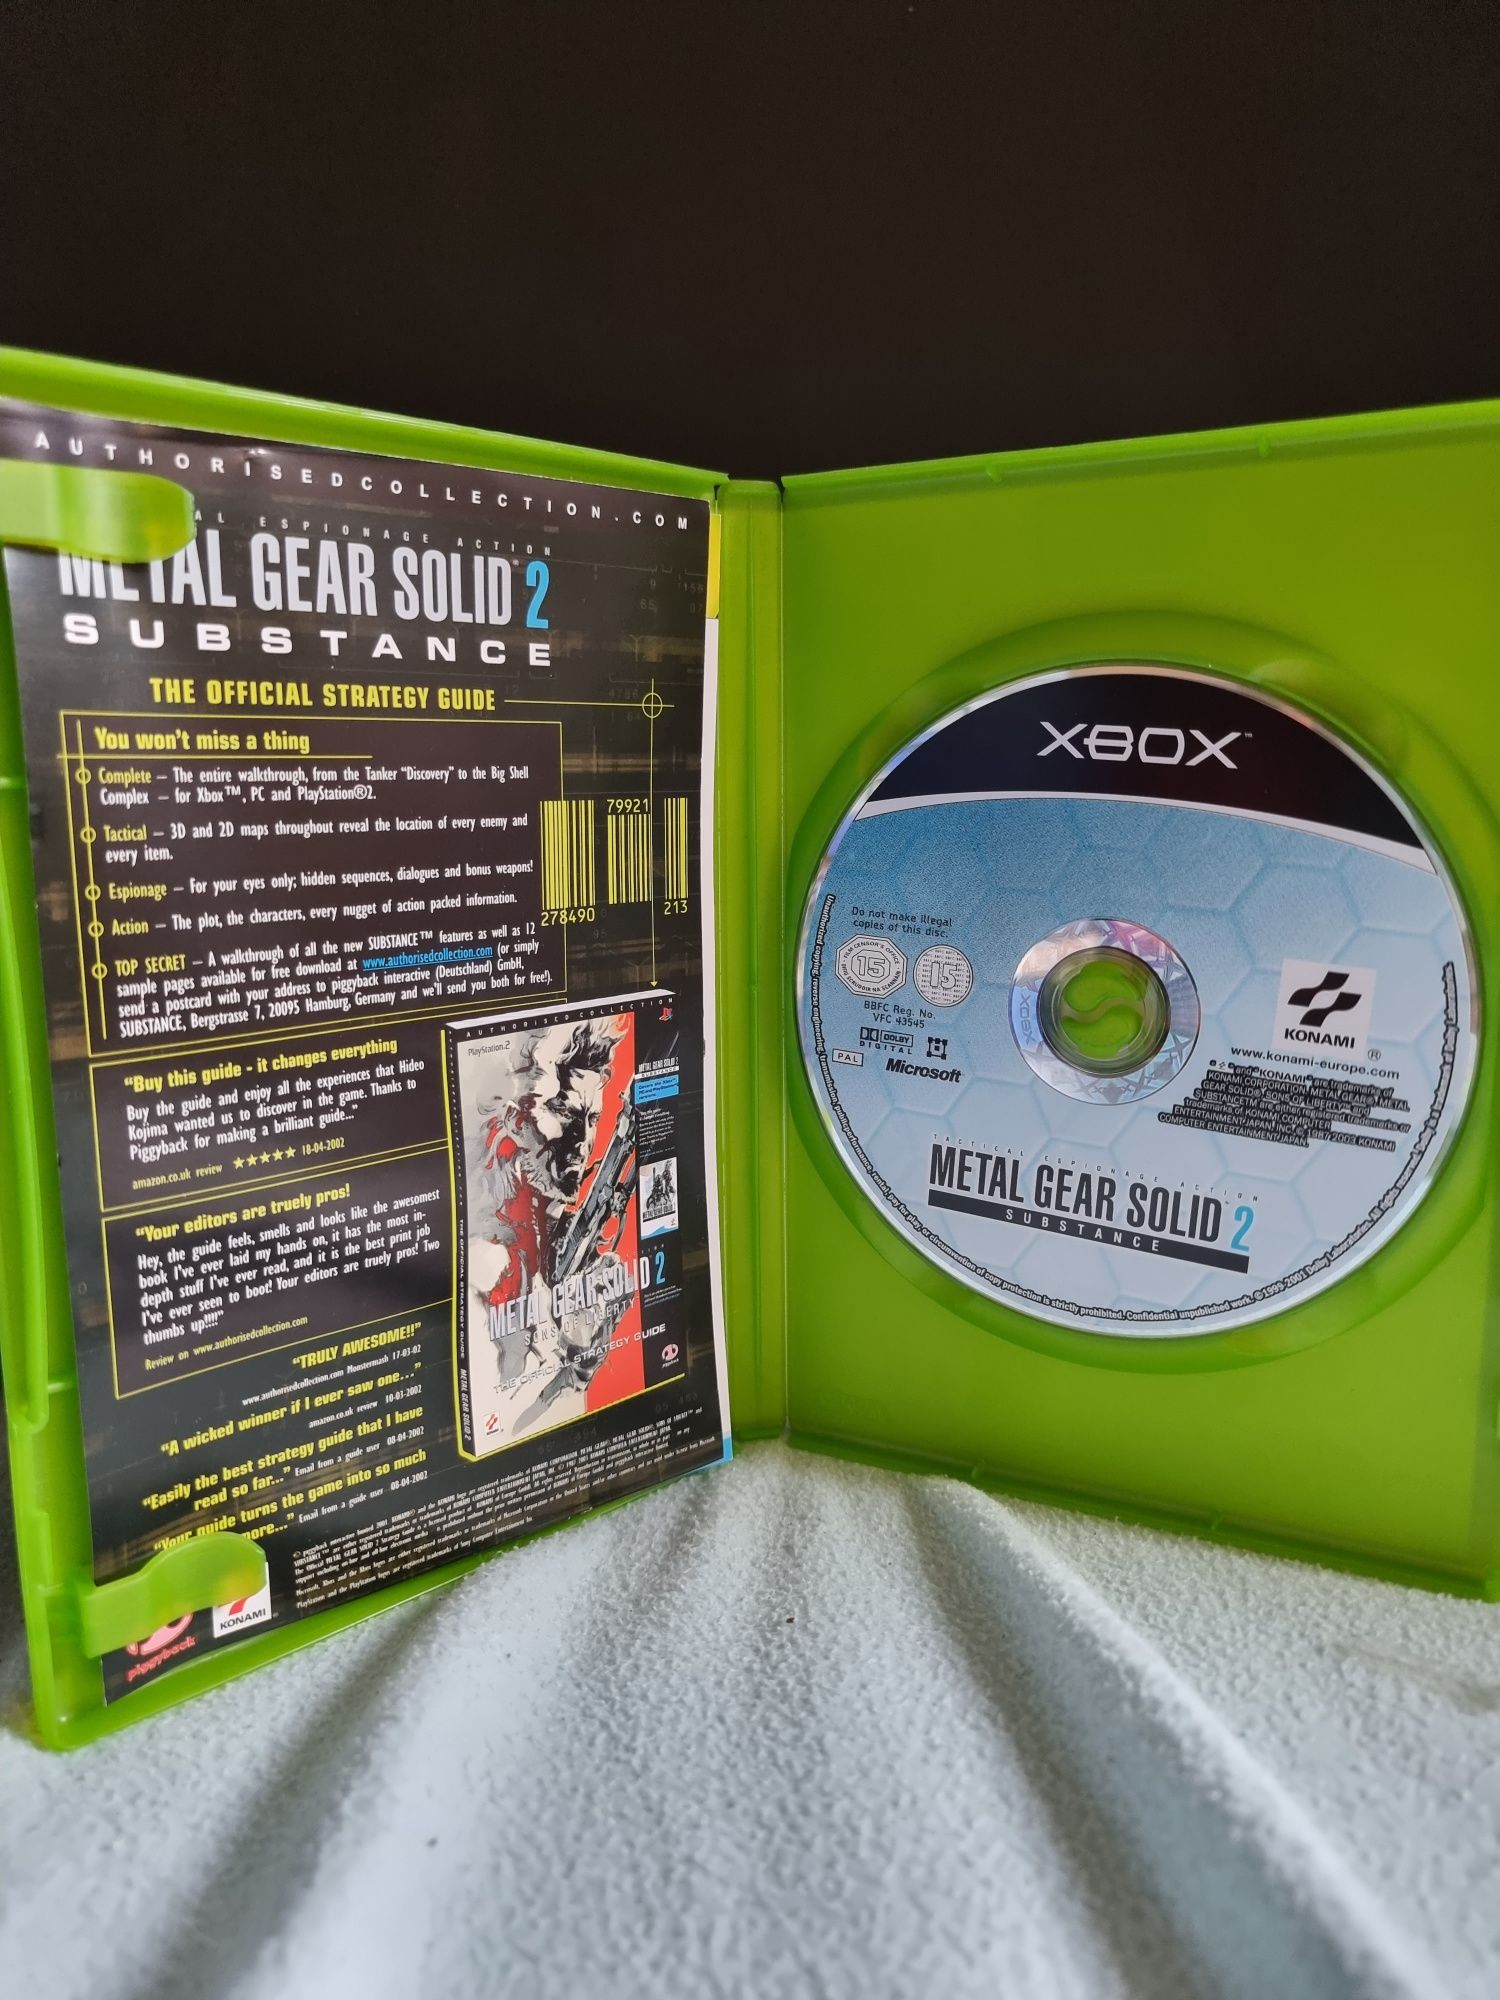 Gra Metal Gear Solid 2: Substance XBOX Microsoft Xbox